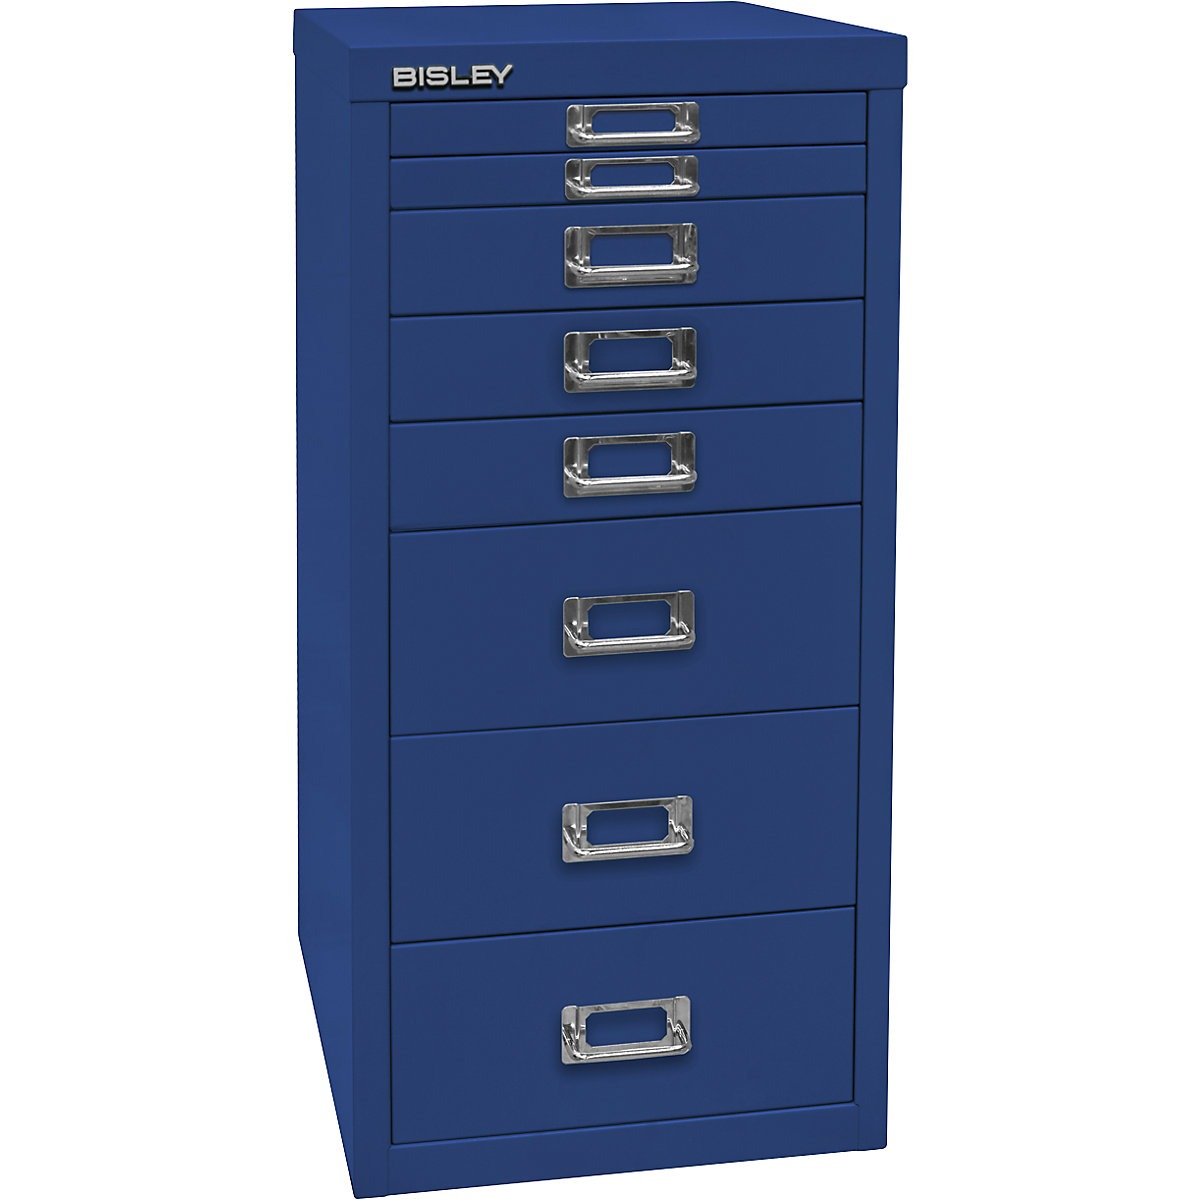 MultiDrawer™ série 29 – BISLEY, format A4, 8 tiroirs, bleu oxford-10